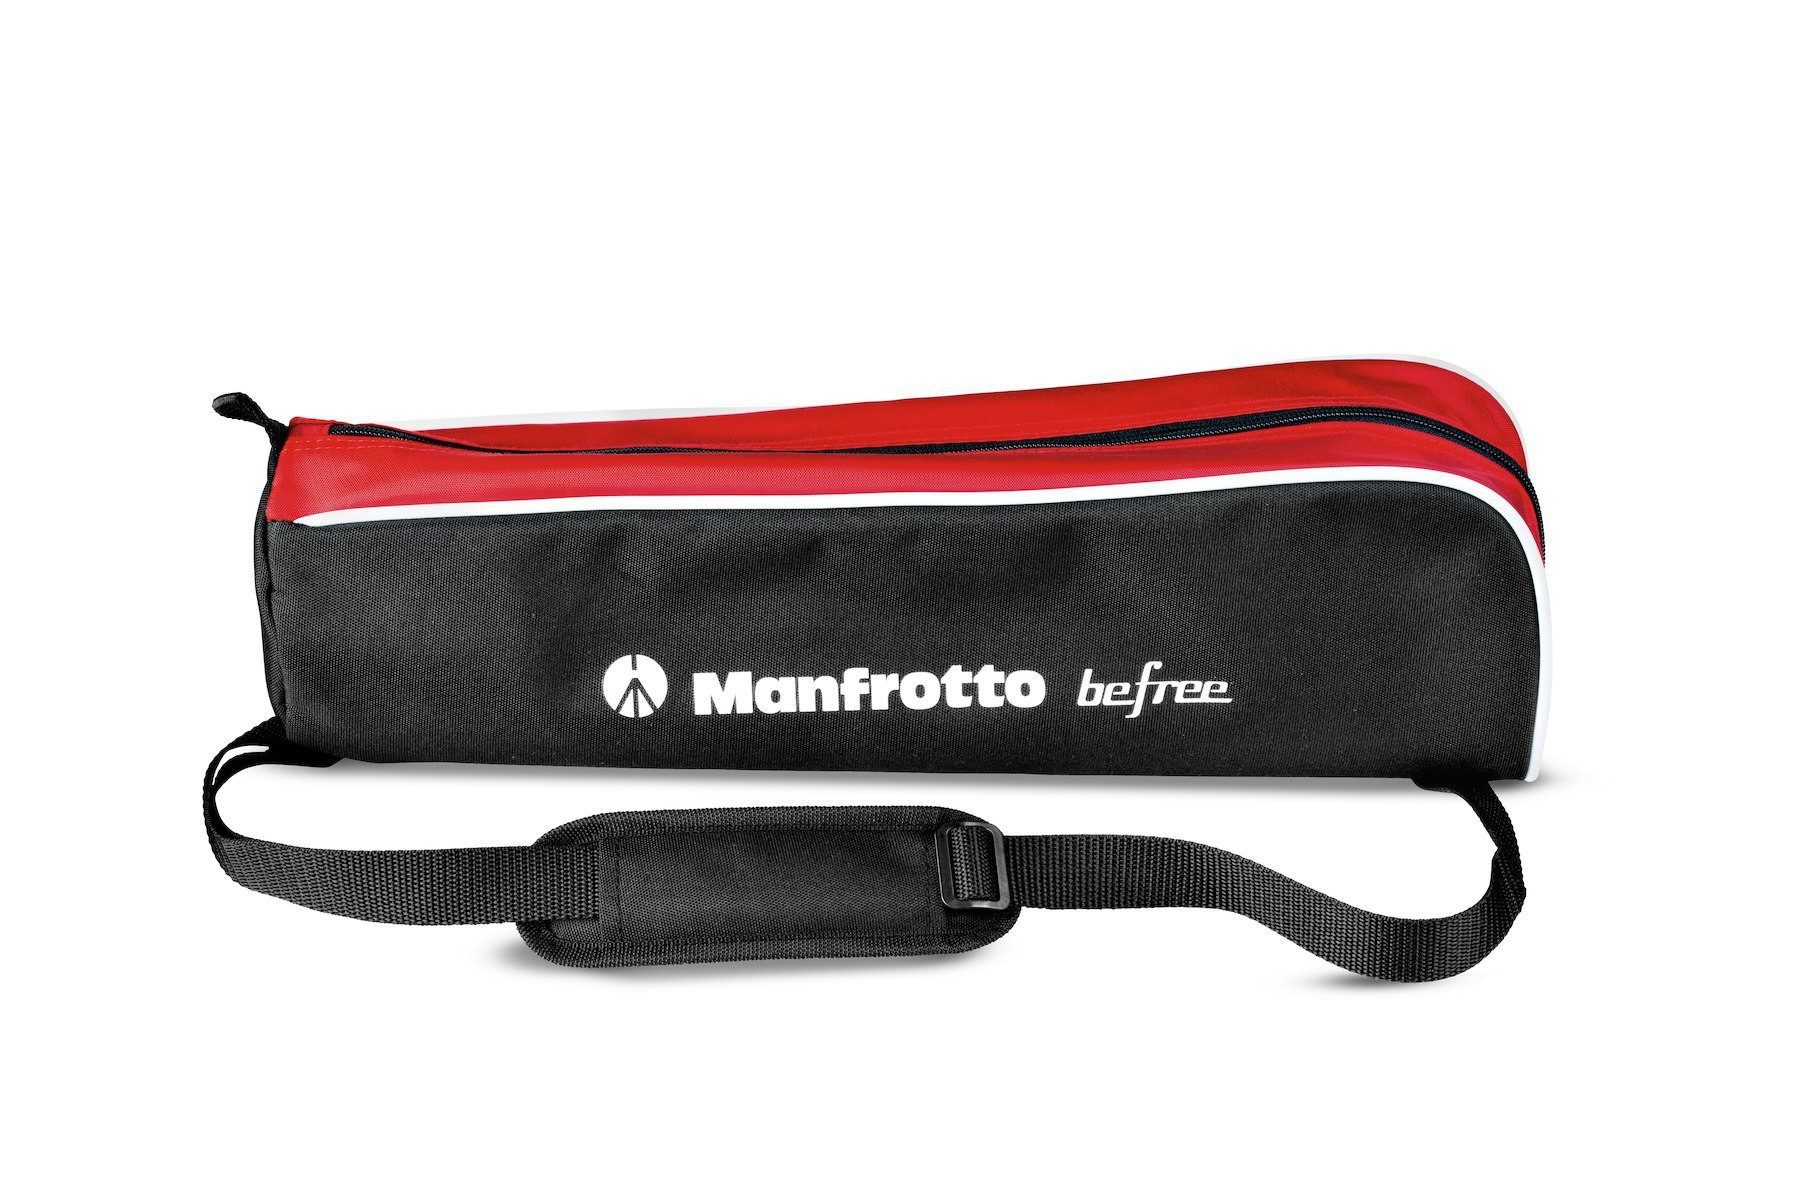 Manfrotto Befree Advanced Aluminum Travel Tripod lever, ball head